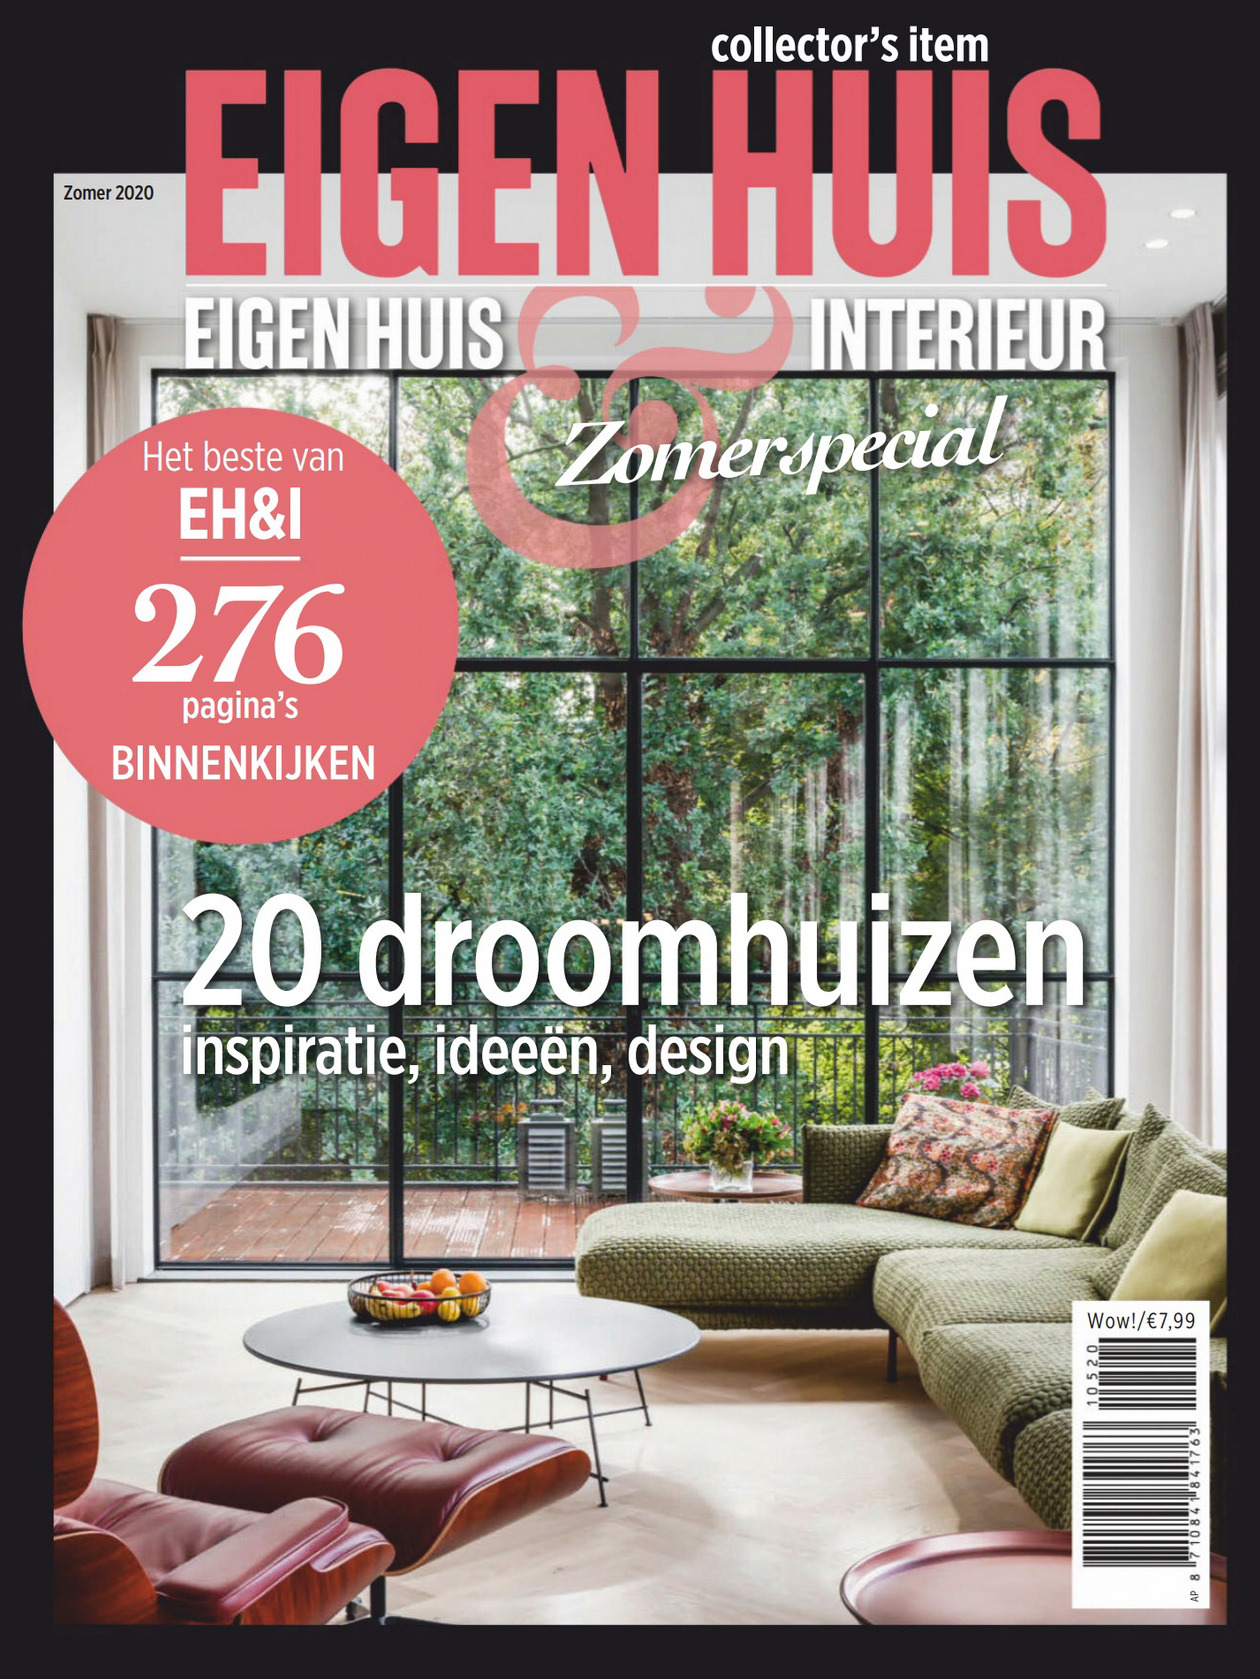 《Eigen Huis & Interieur》荷兰版室内设计杂志2020年夏季号